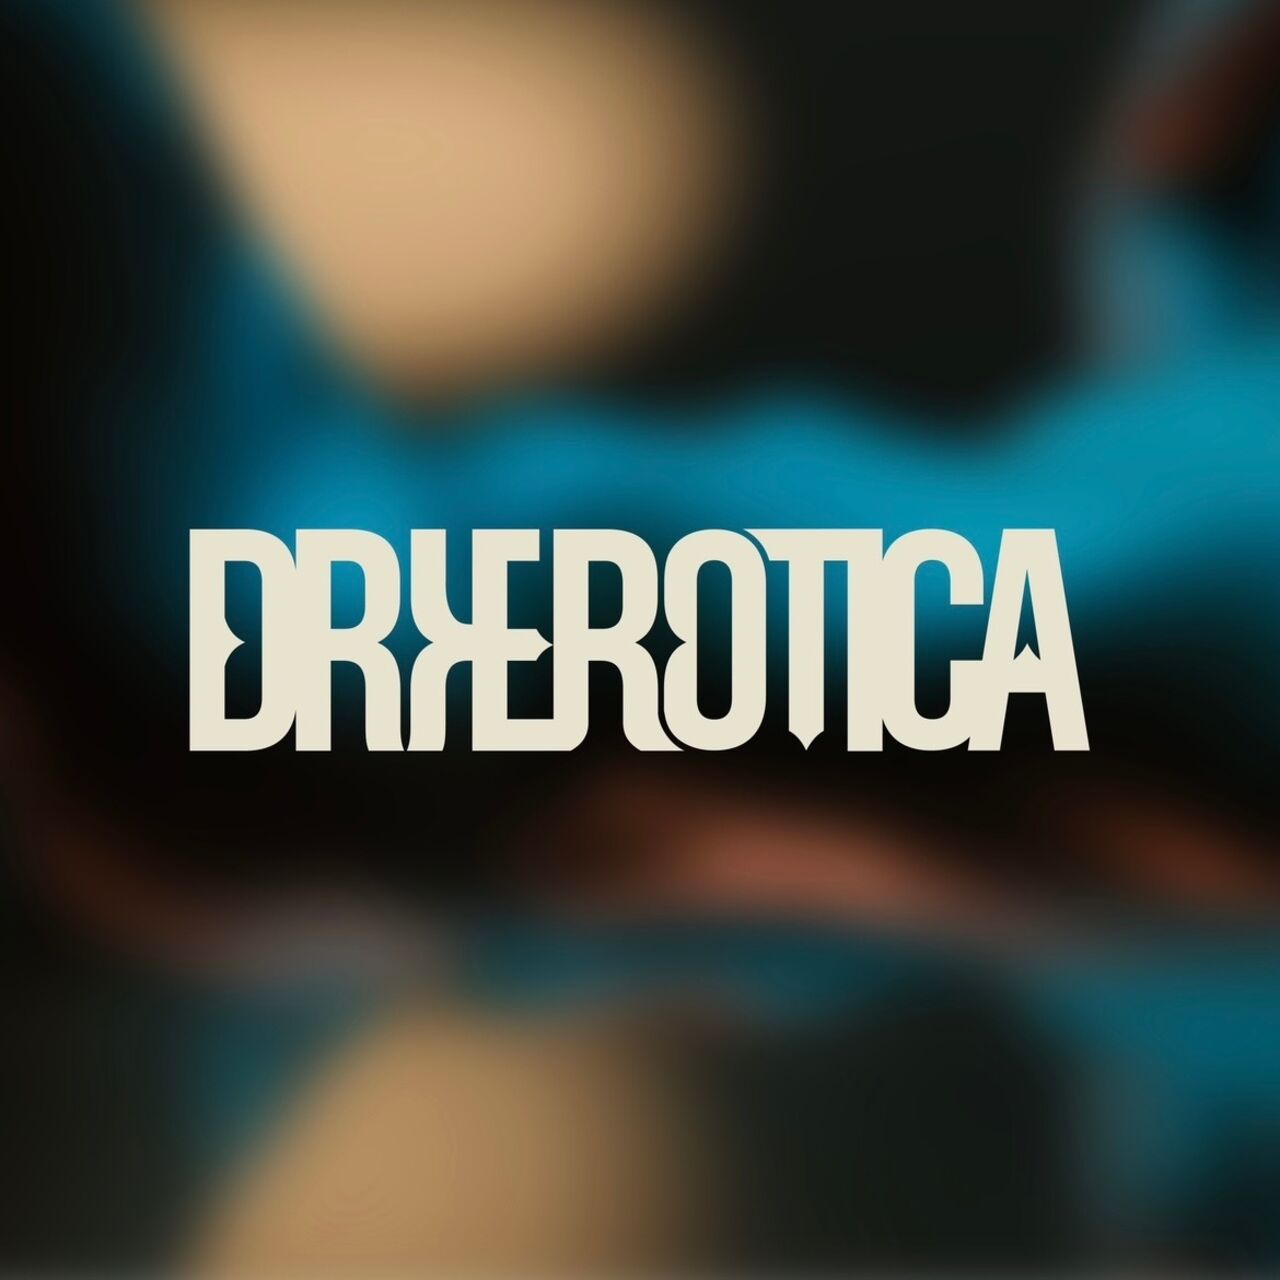 See dryerotica profile